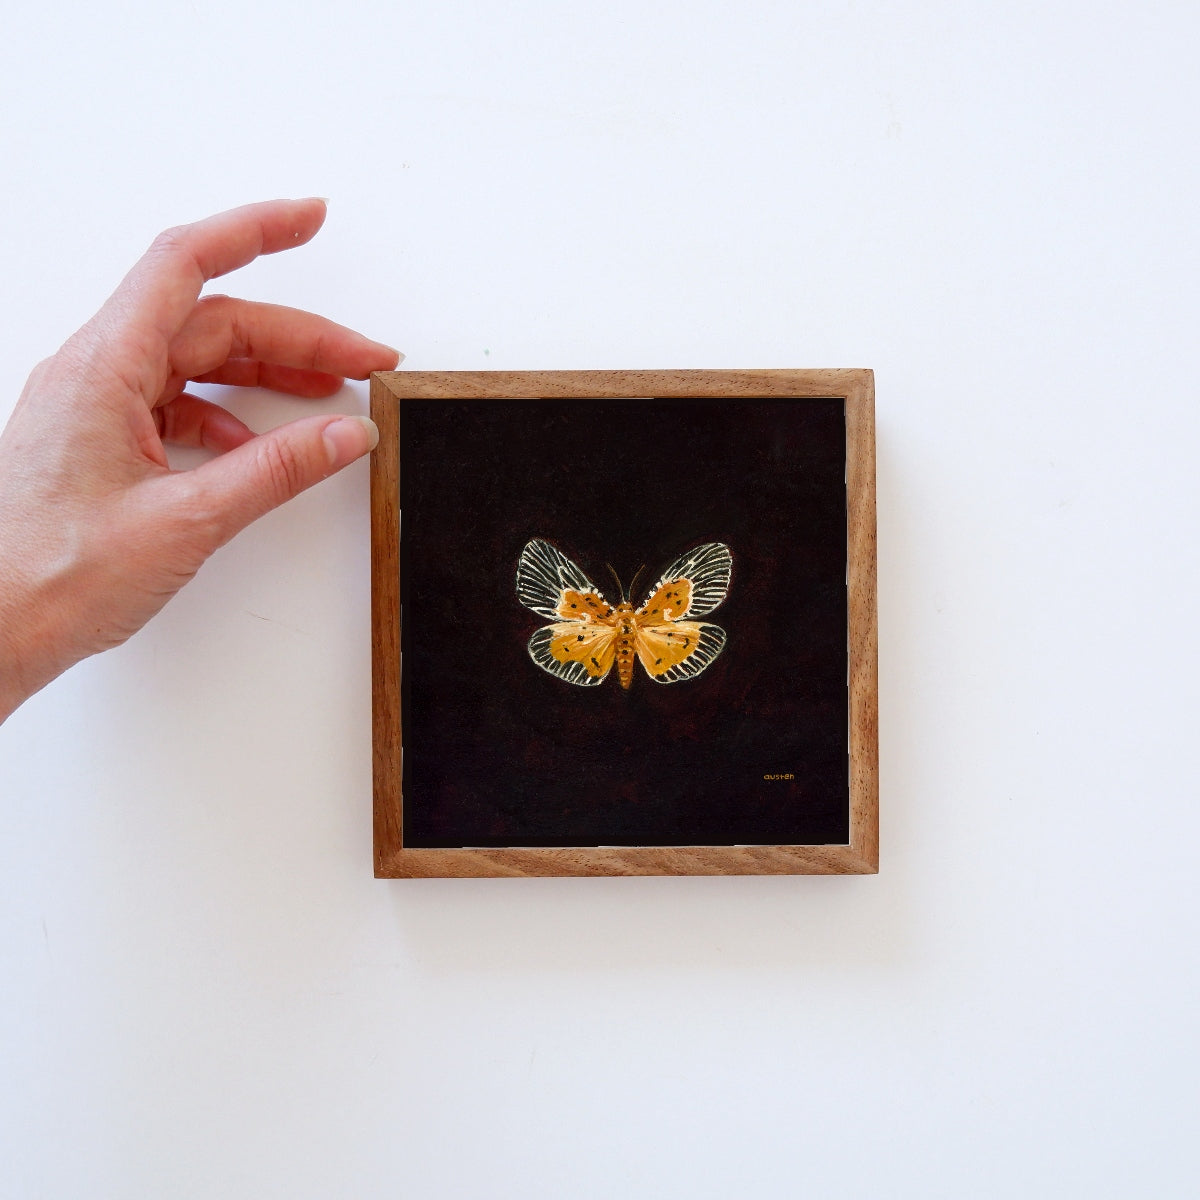 Peridrome Orbicularis Moth - Fine Art Print